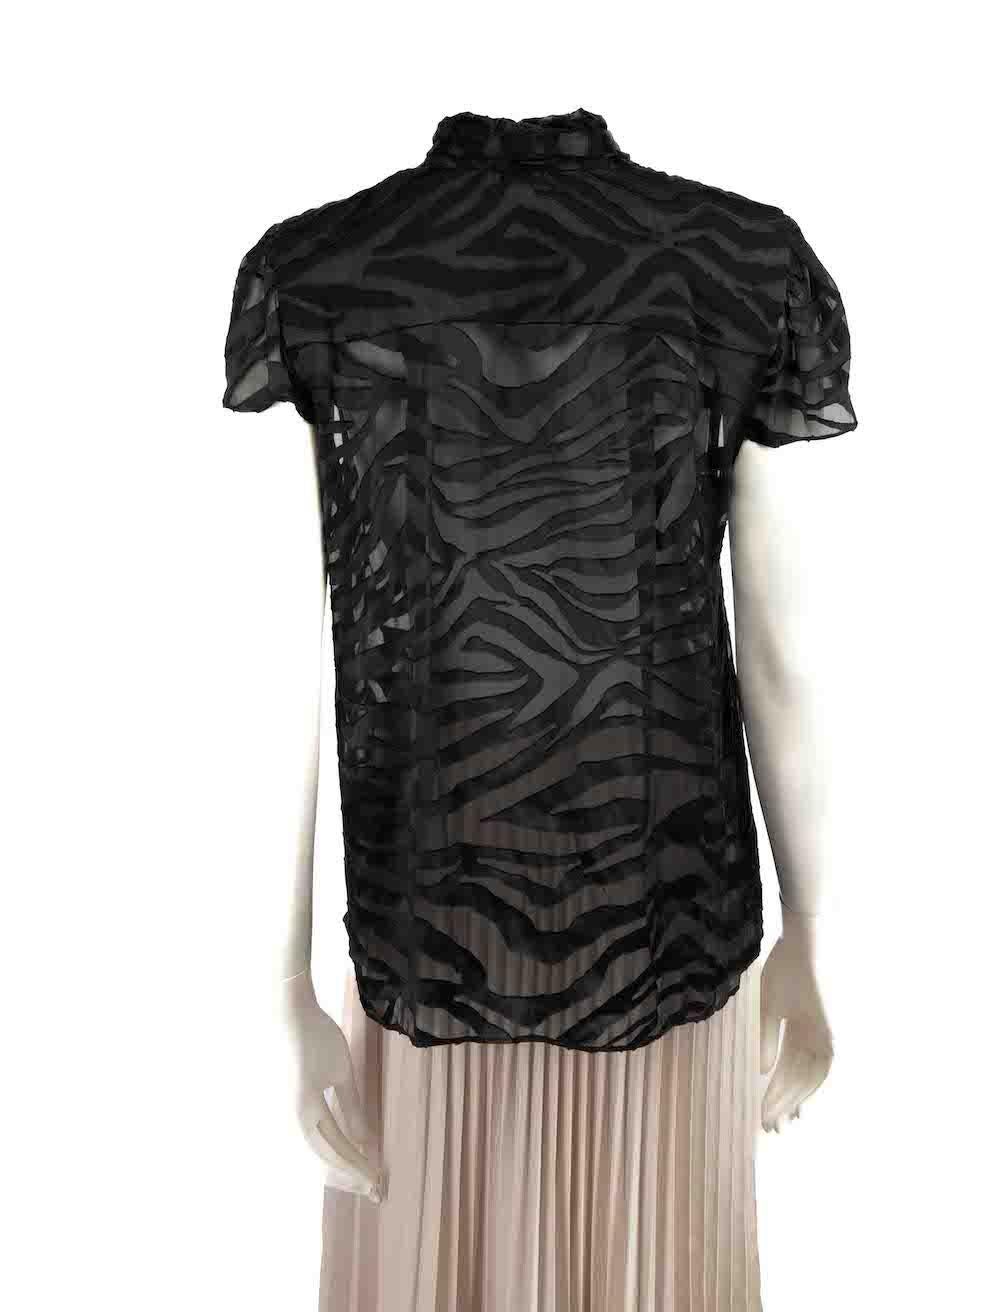 Alice + Olivia Black Zebra Jacquard Sheer Blouse Size XL In Good Condition For Sale In London, GB